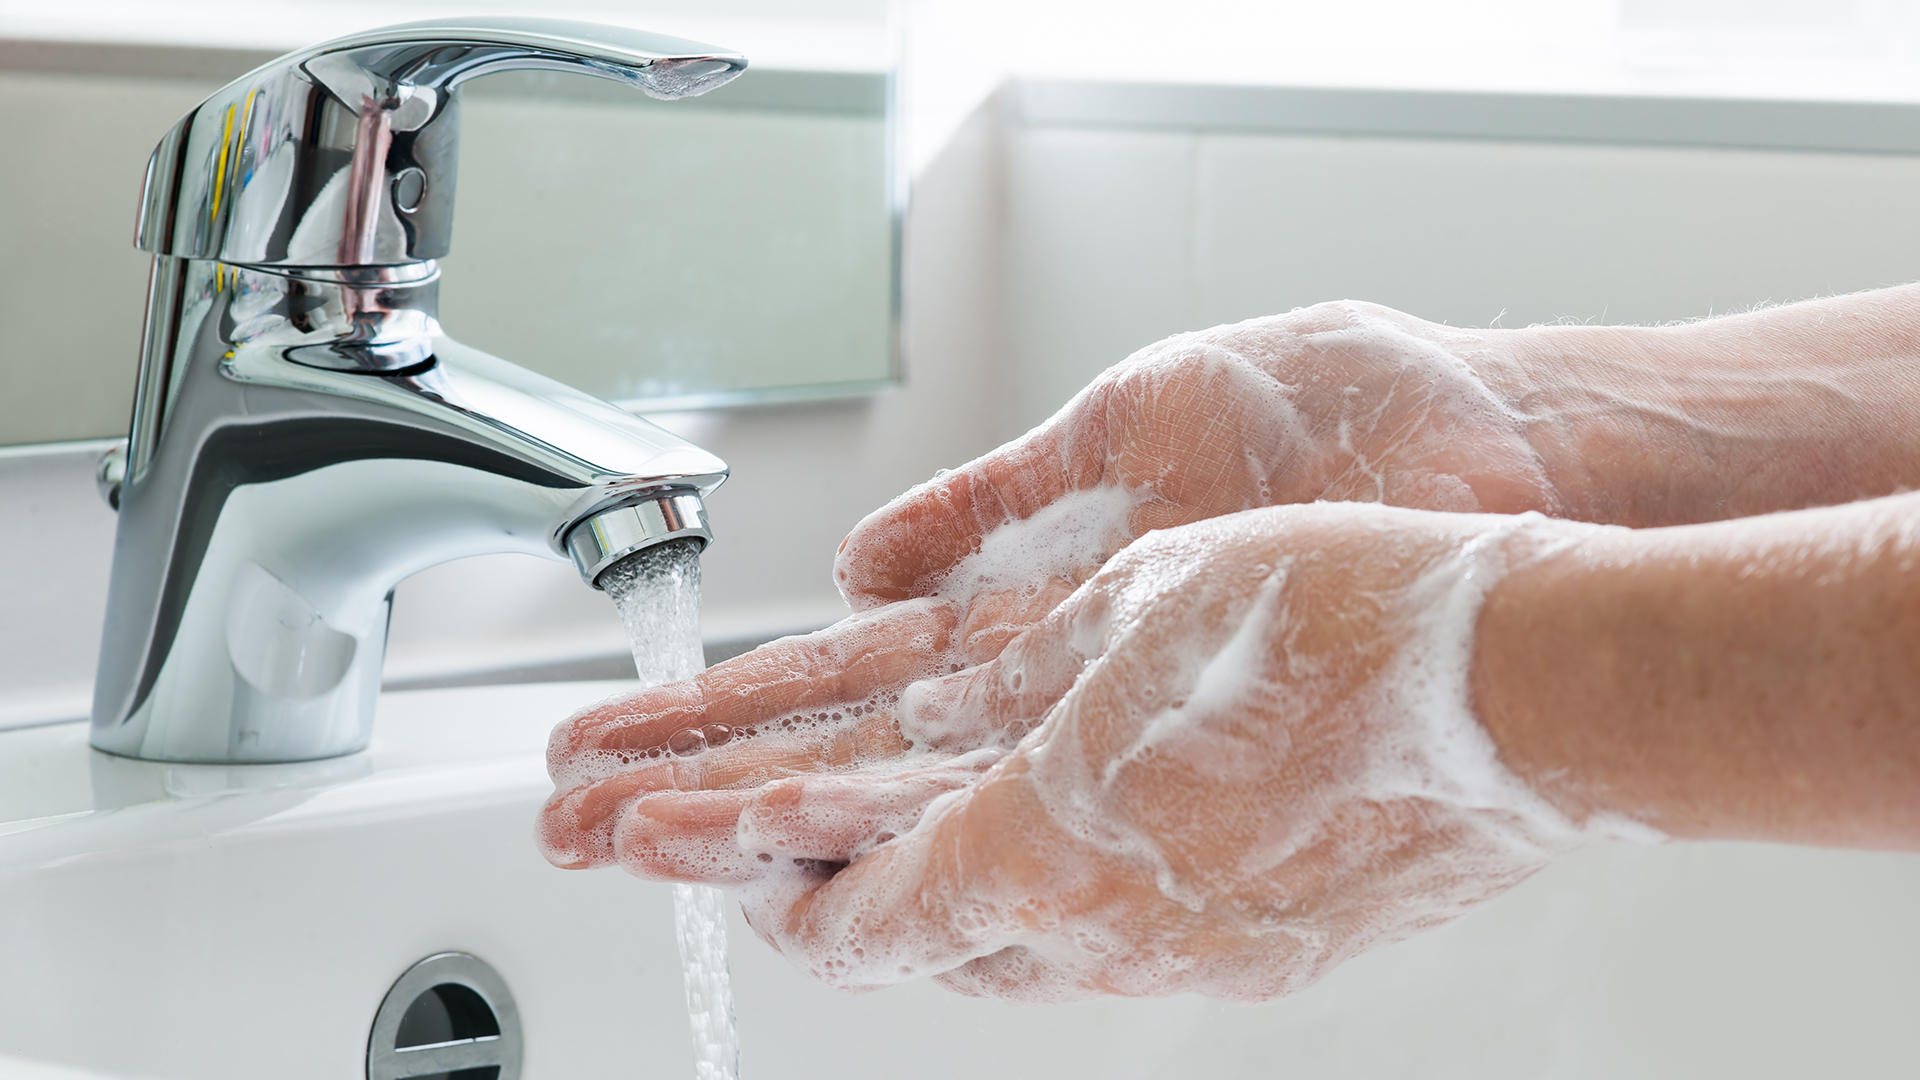 Hygiene. Cleaning Hands. Washing hands.; Shutterstock ID 260417144